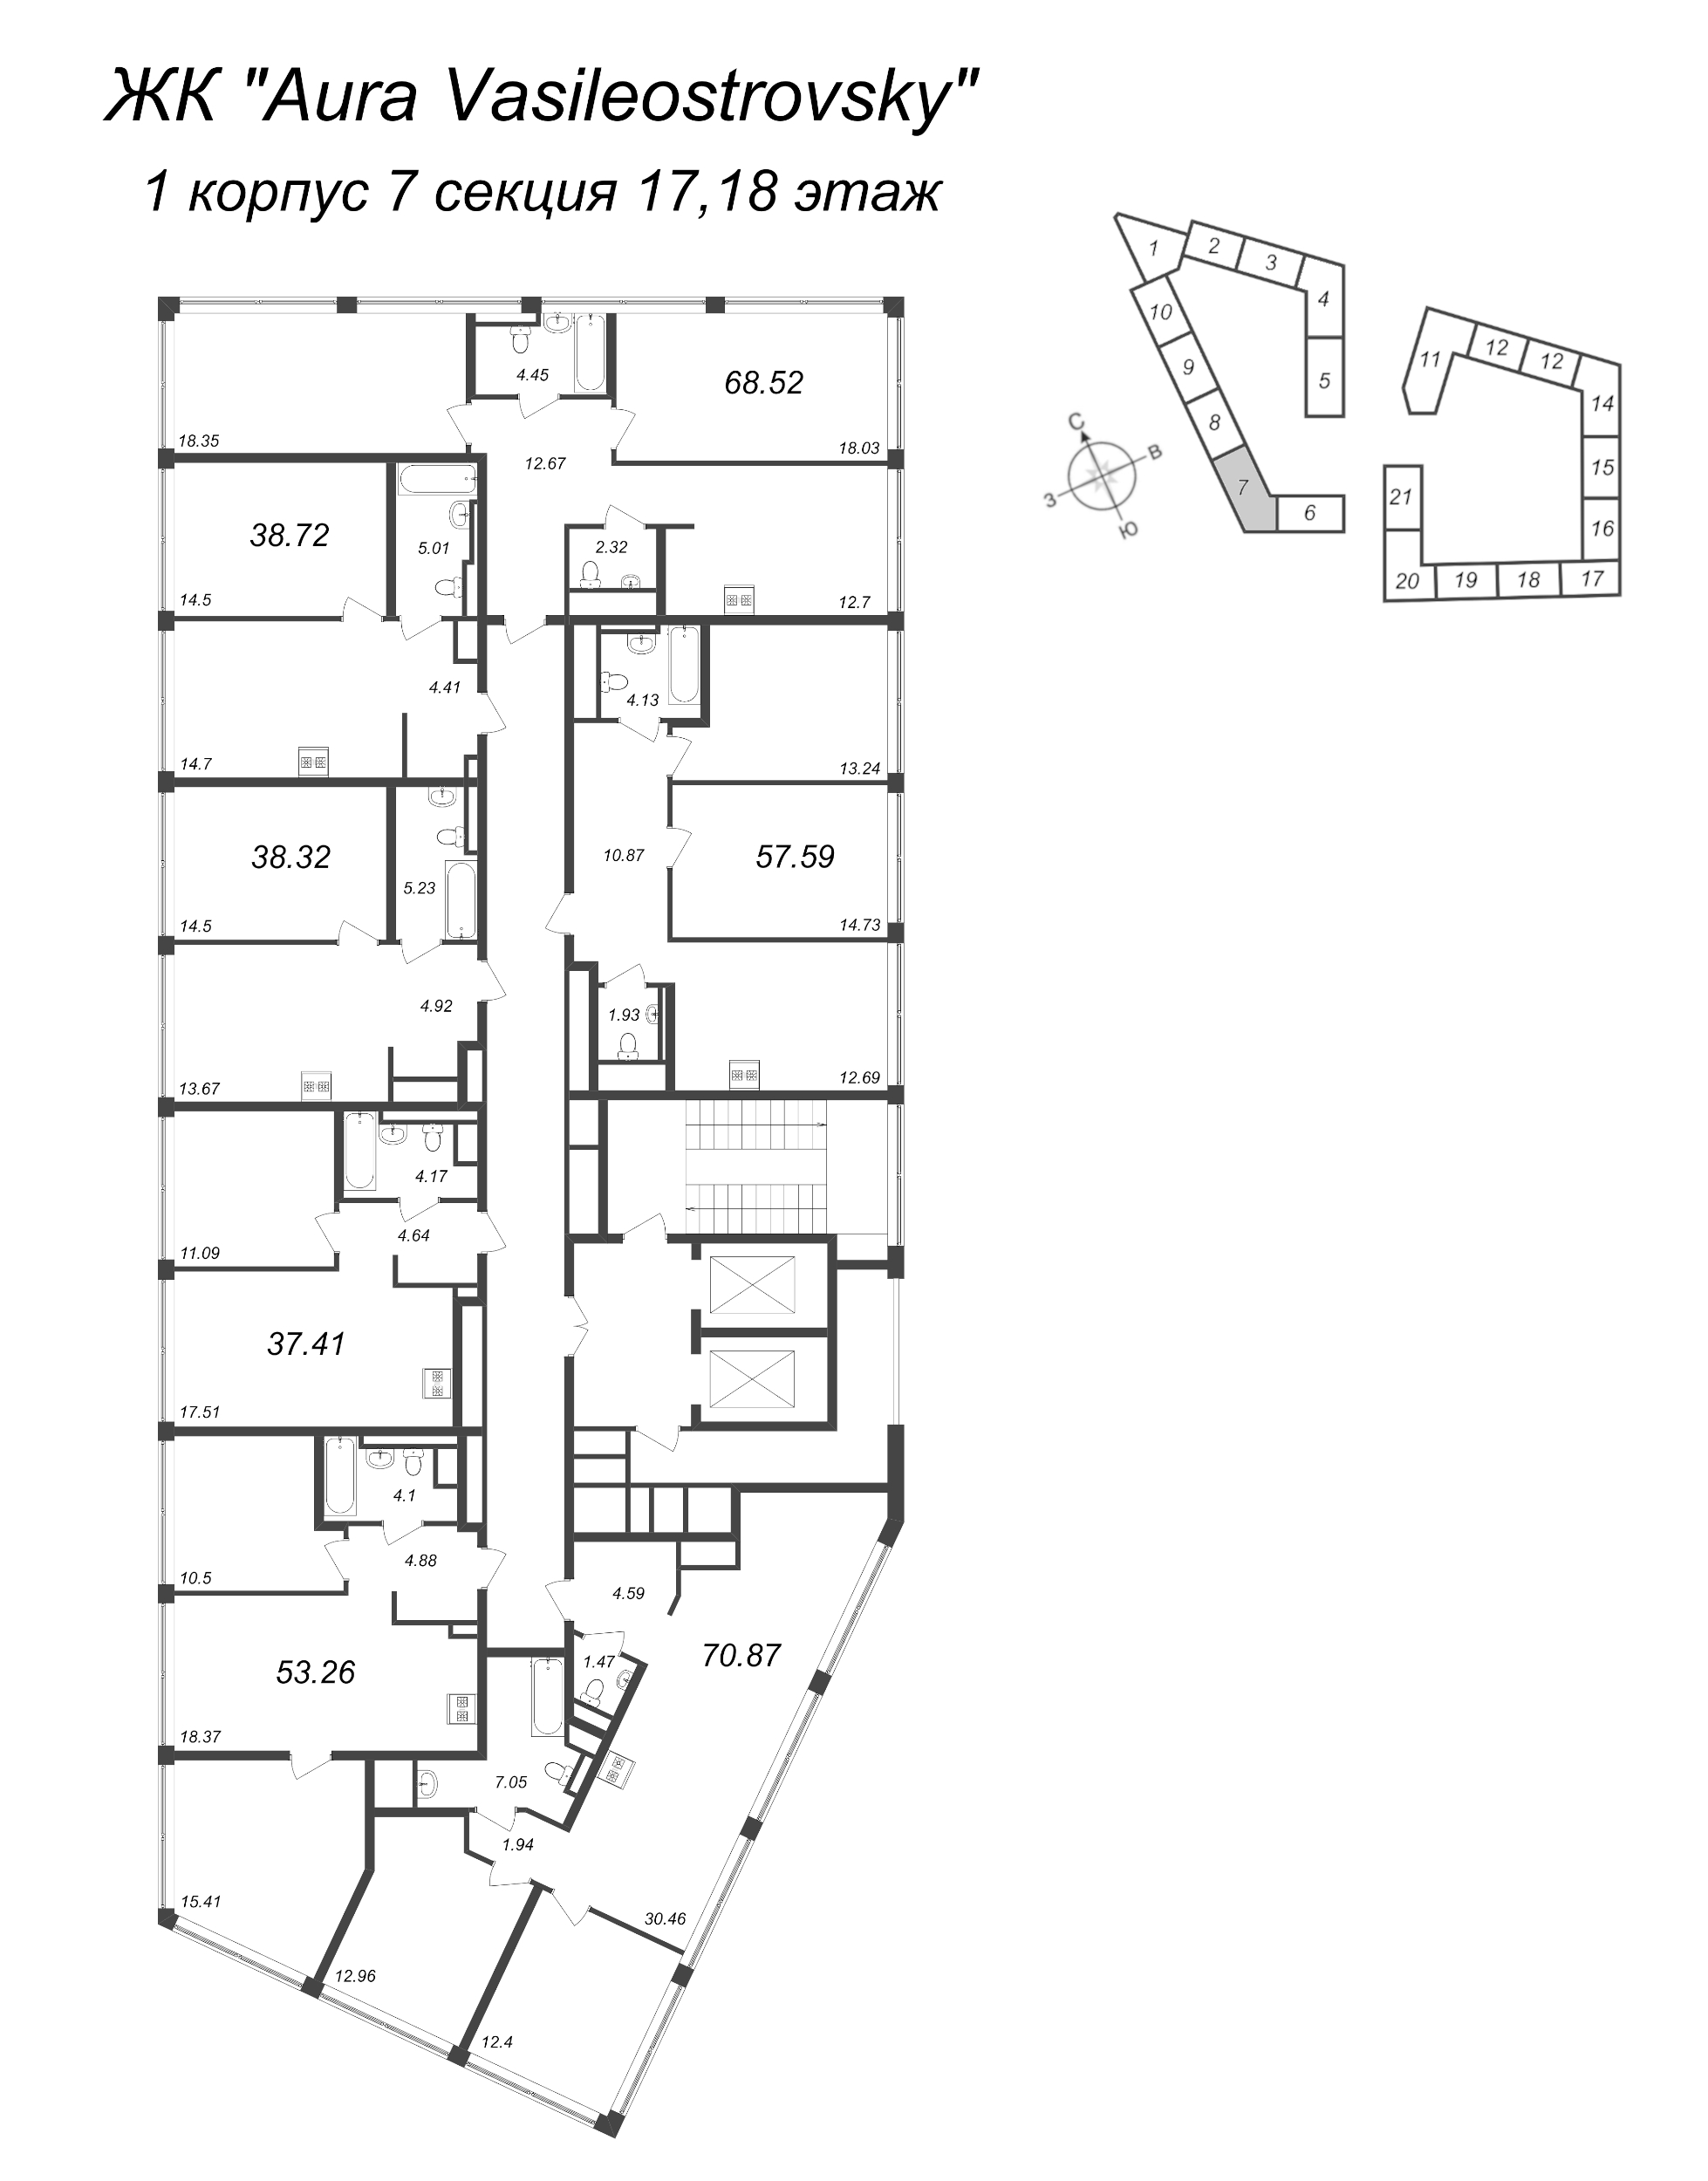 3-комнатная (Евро) квартира, 53.26 м² - планировка этажа